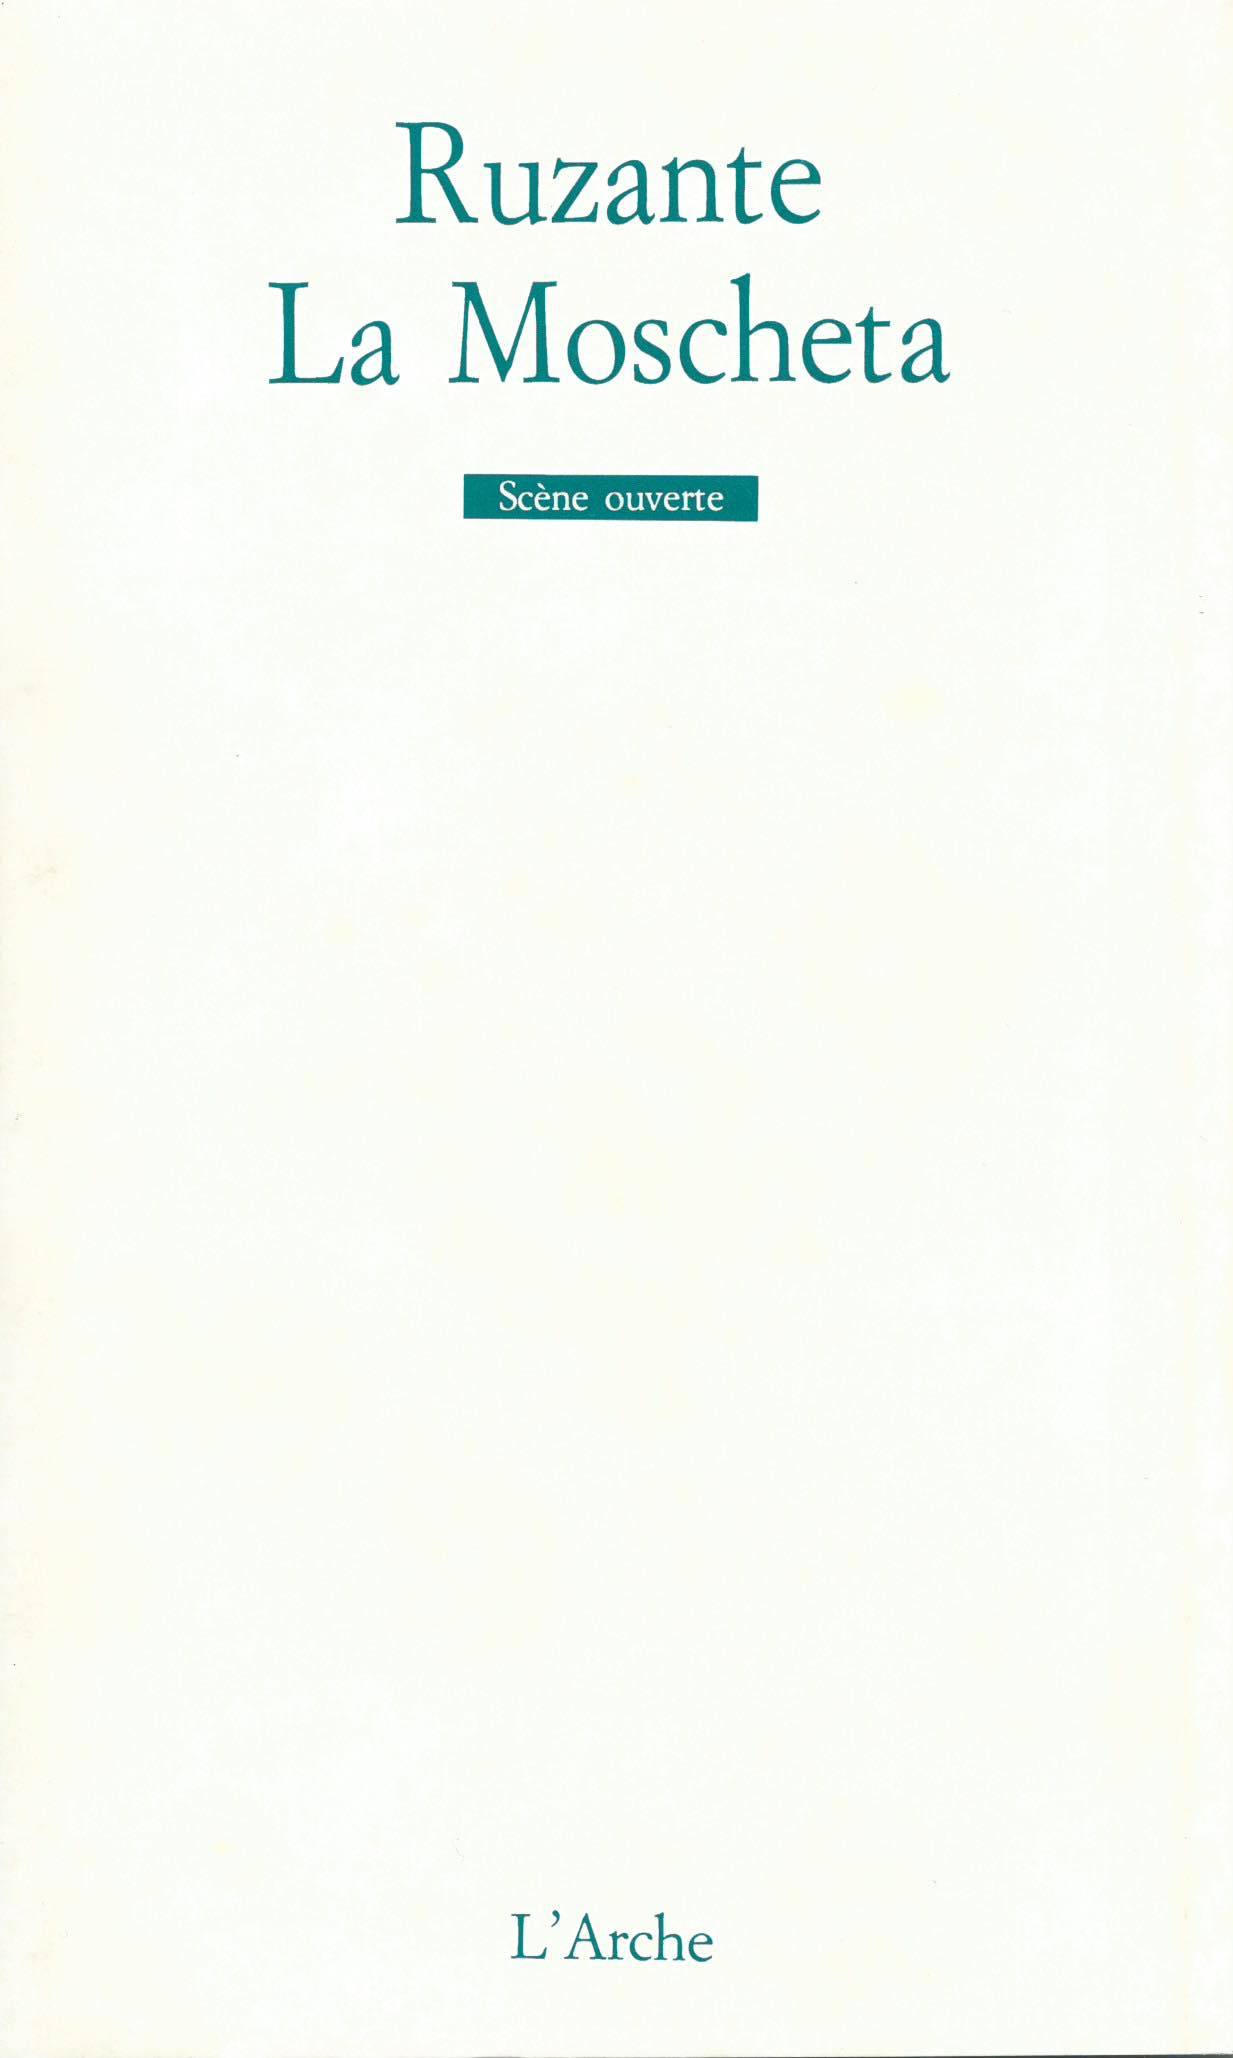 Parlerie de Ruzante qui de guerre revint / Bilora / La Moscheta (9782851812513-front-cover)